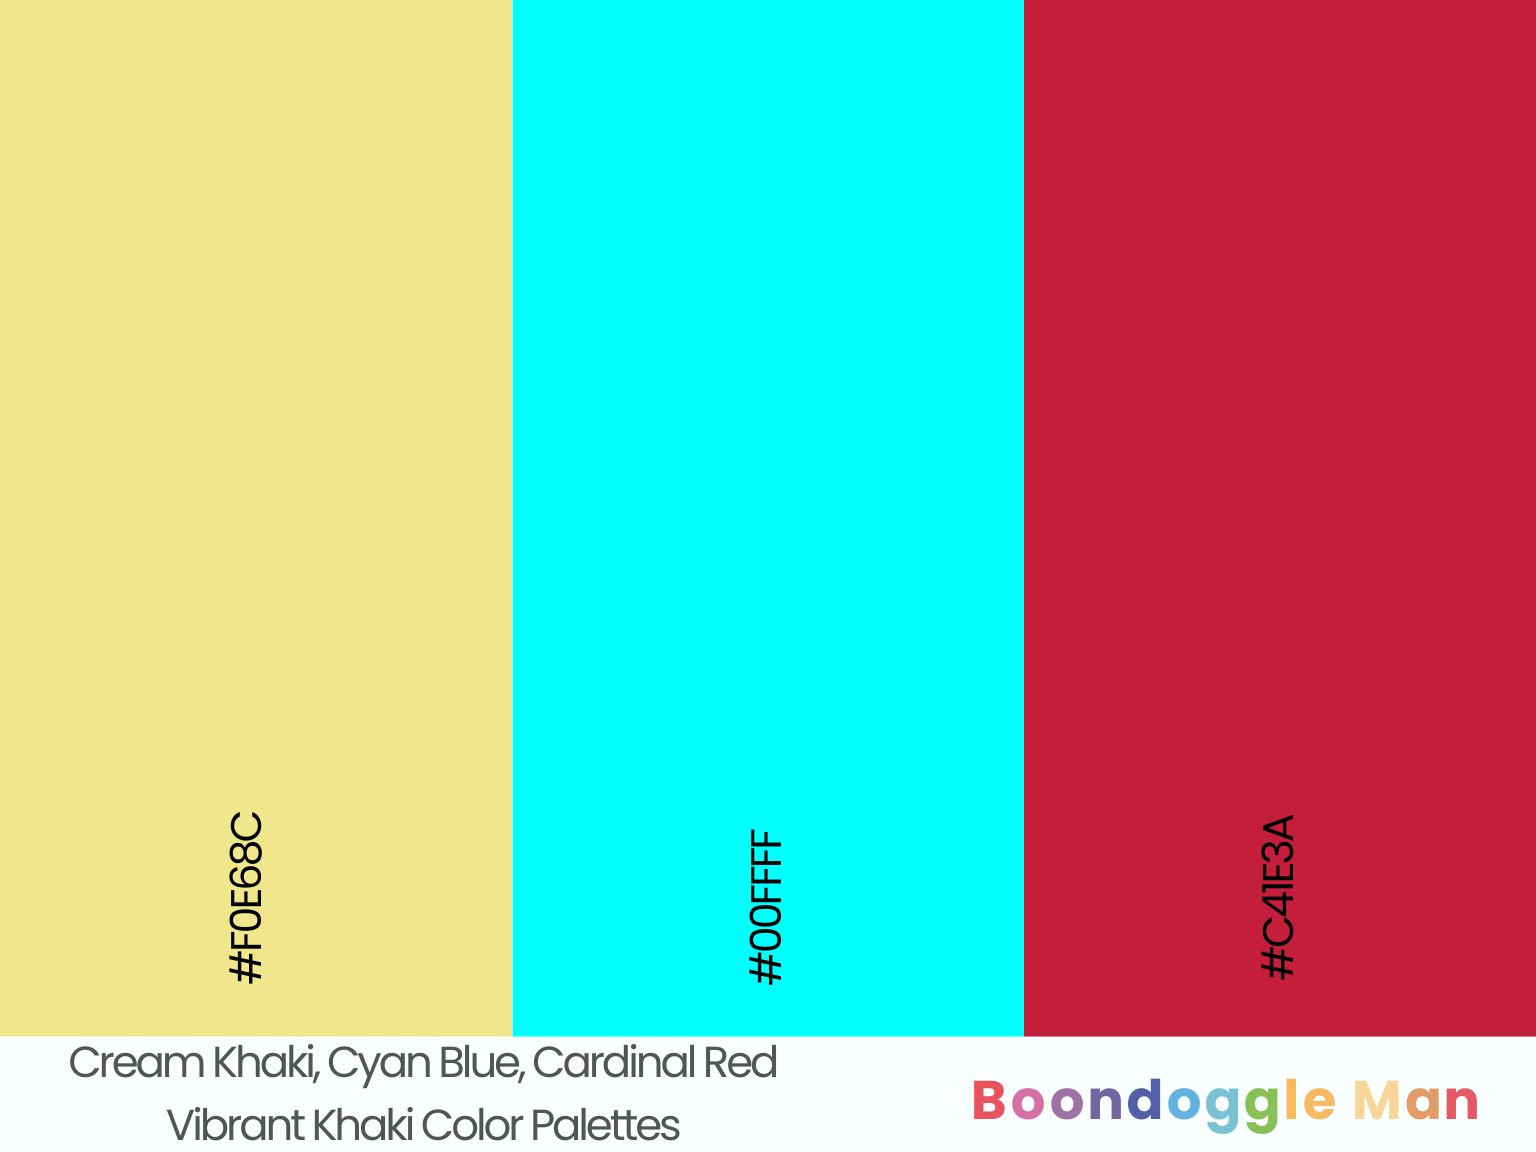 Cream Khaki, Cyan Blue, Cardinal Red